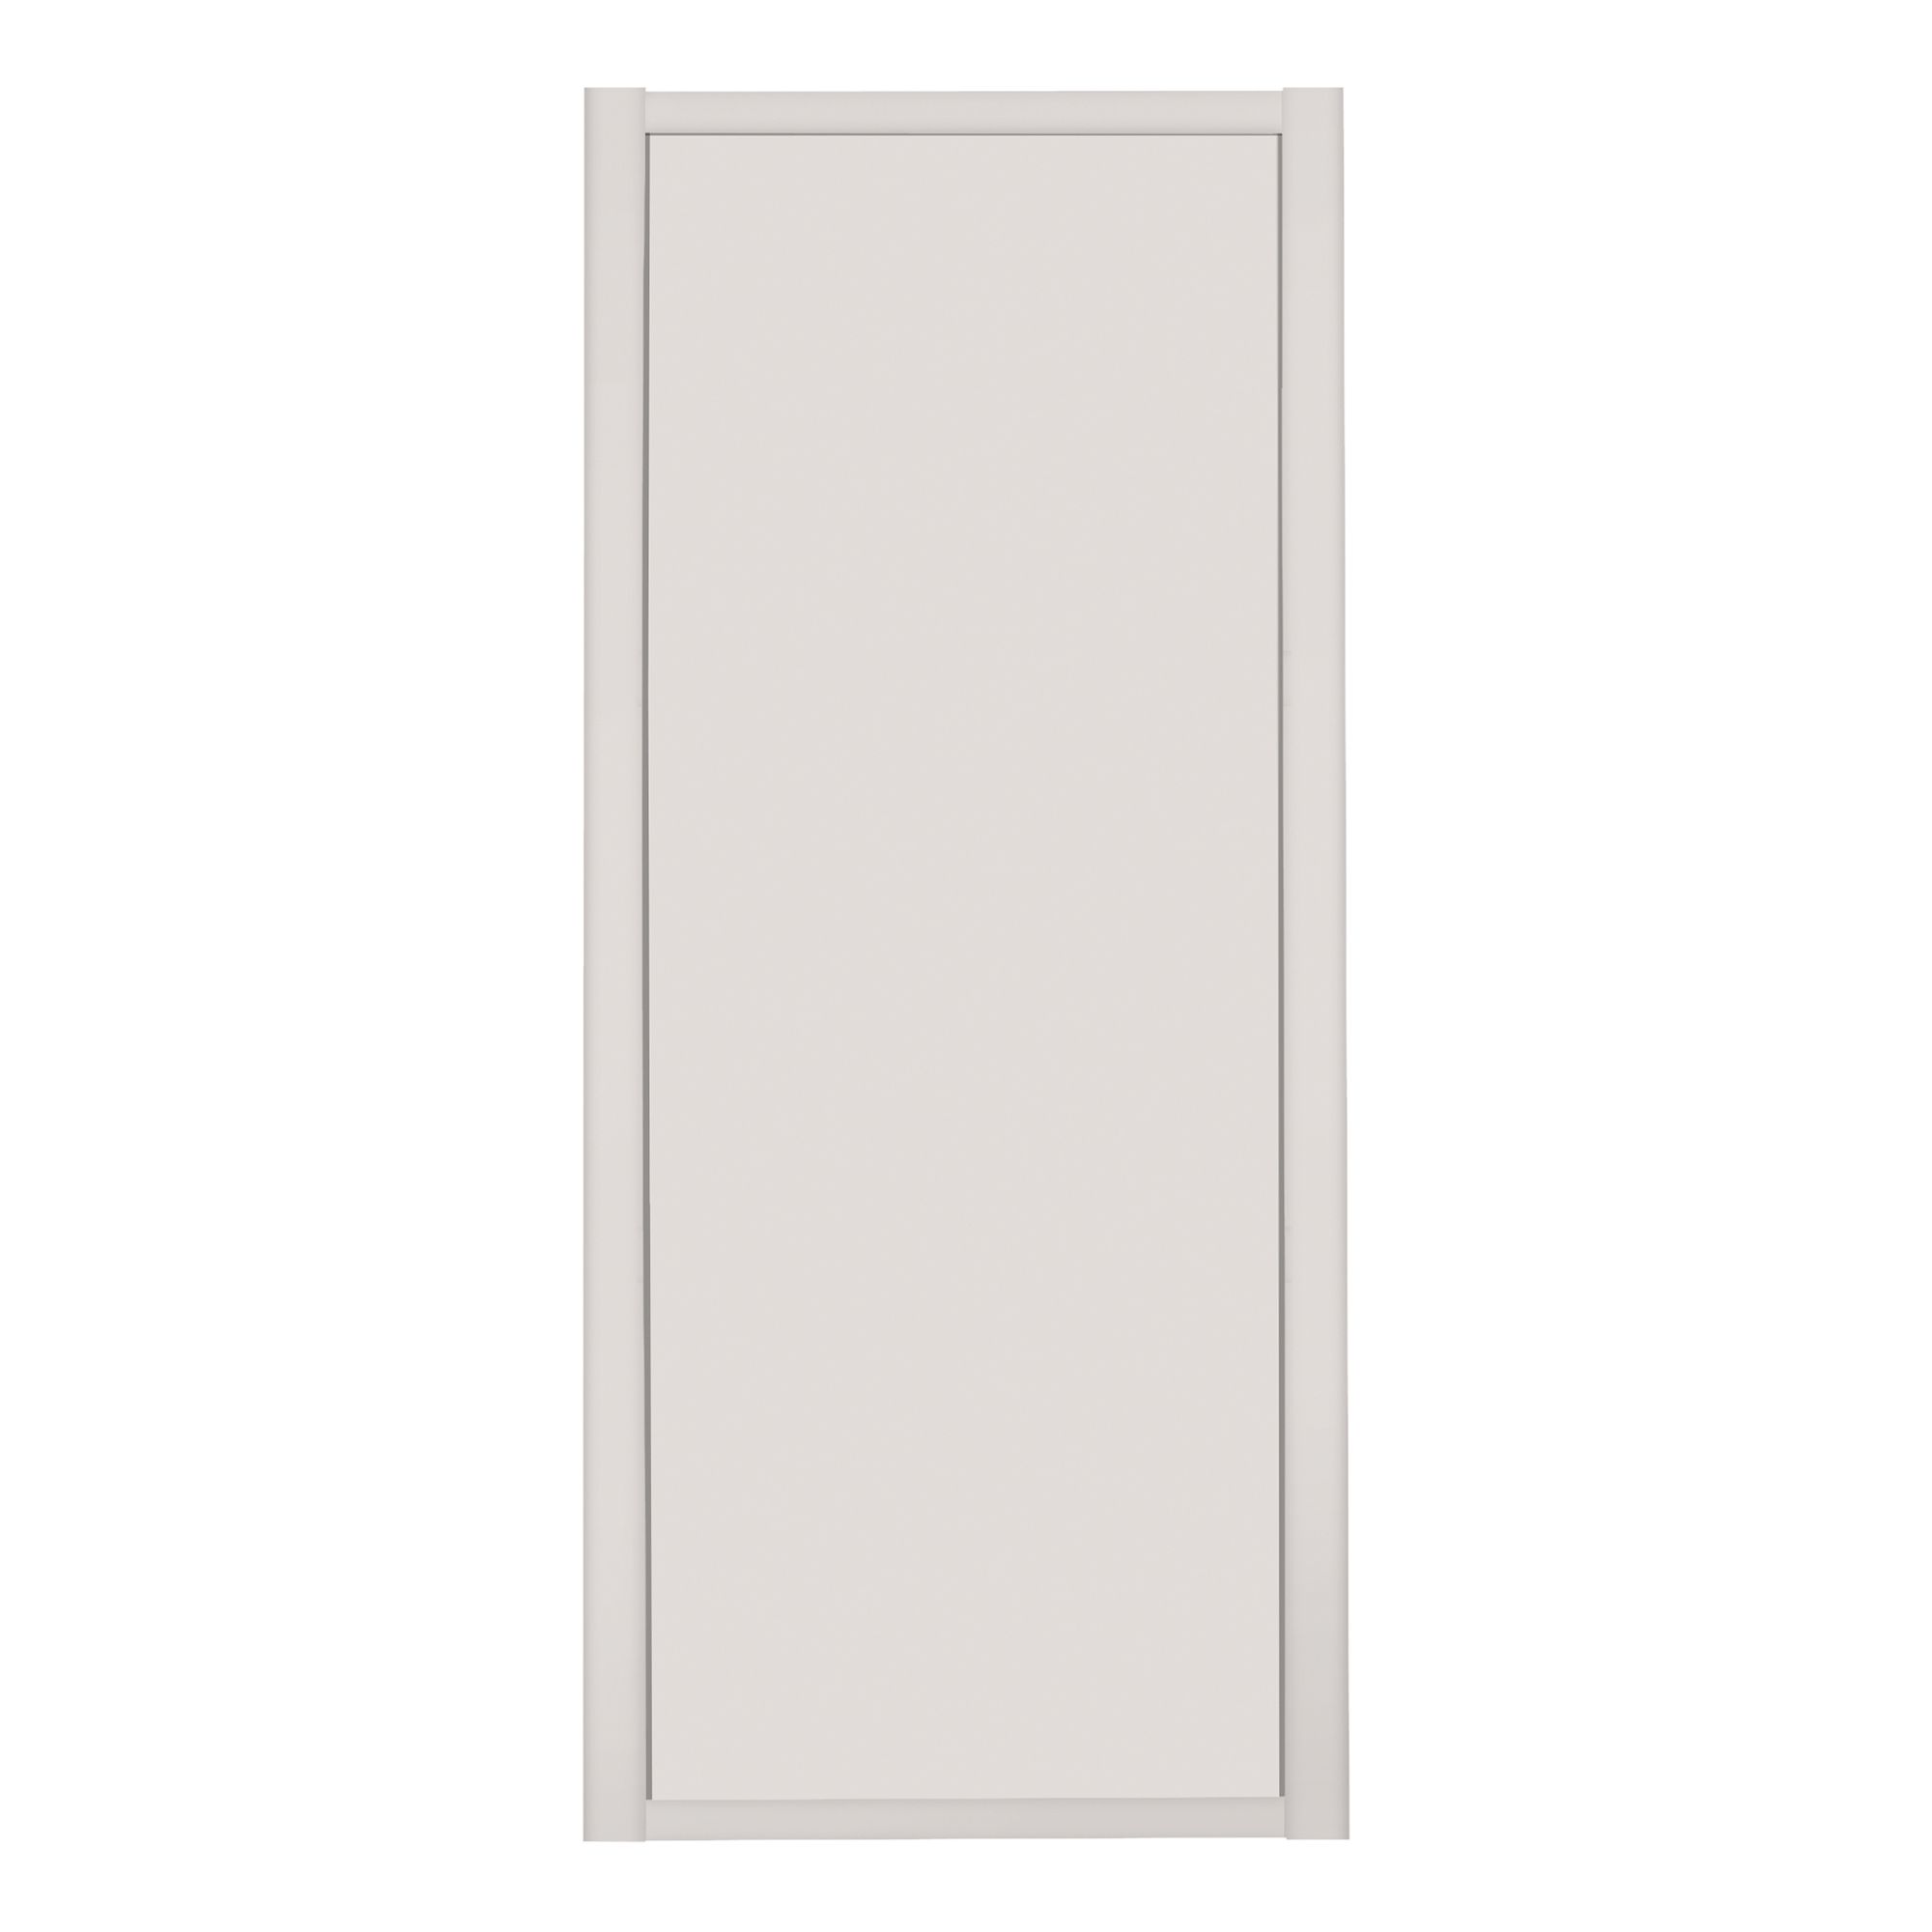 Spacepro Shaker Cashmere Single panel Sliding wardrobe door x (W) 762mm